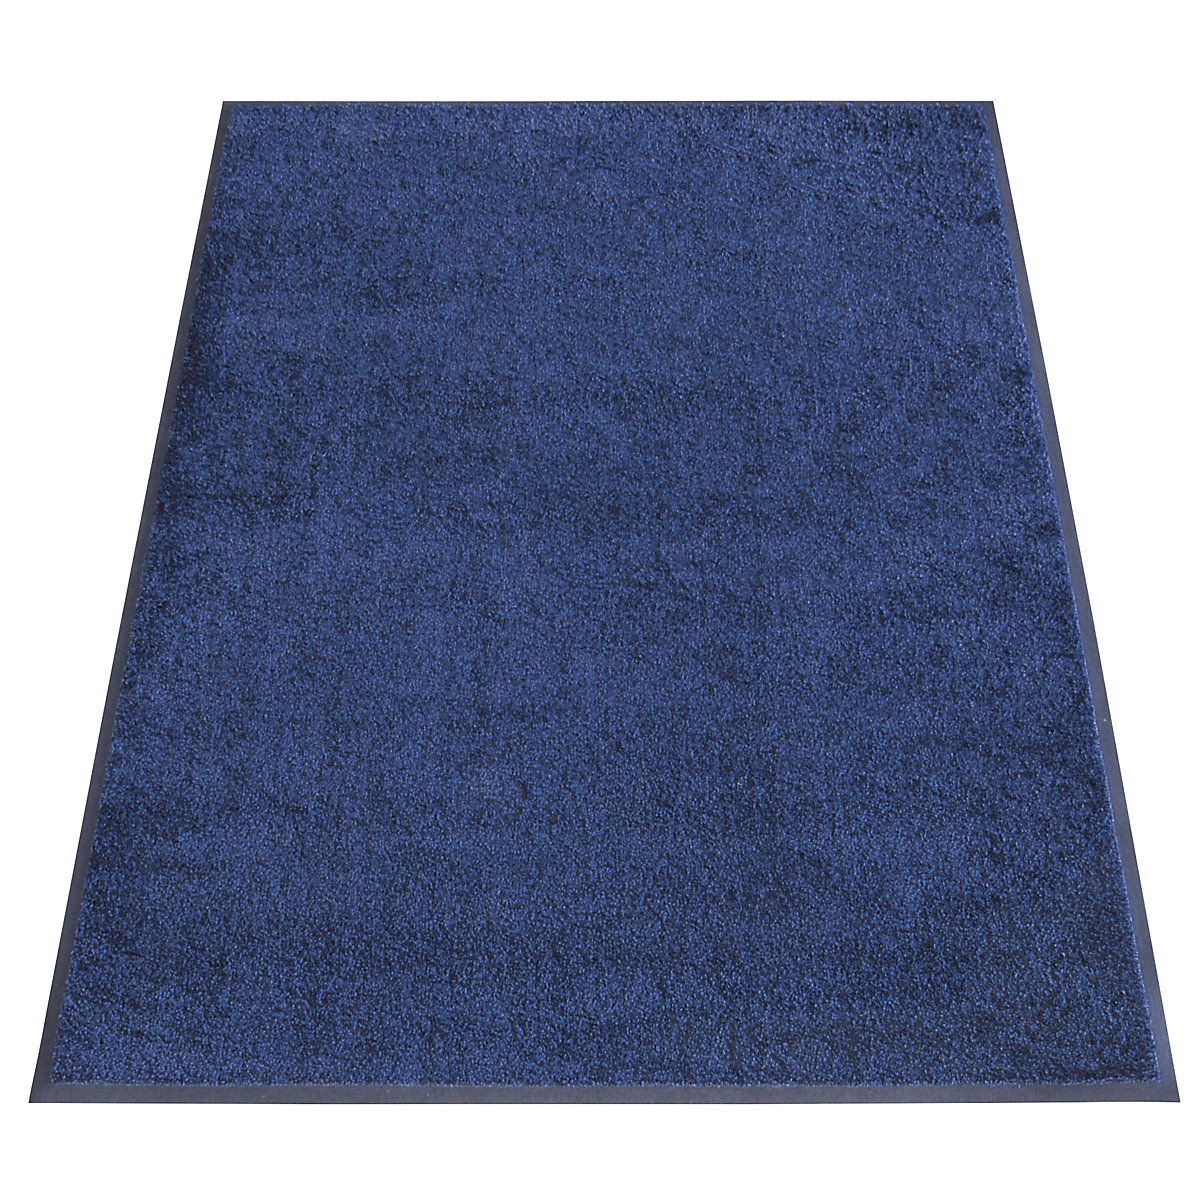 EAZYCARE WASH entrance matting, LxW 1800 x 1150 mm, blue